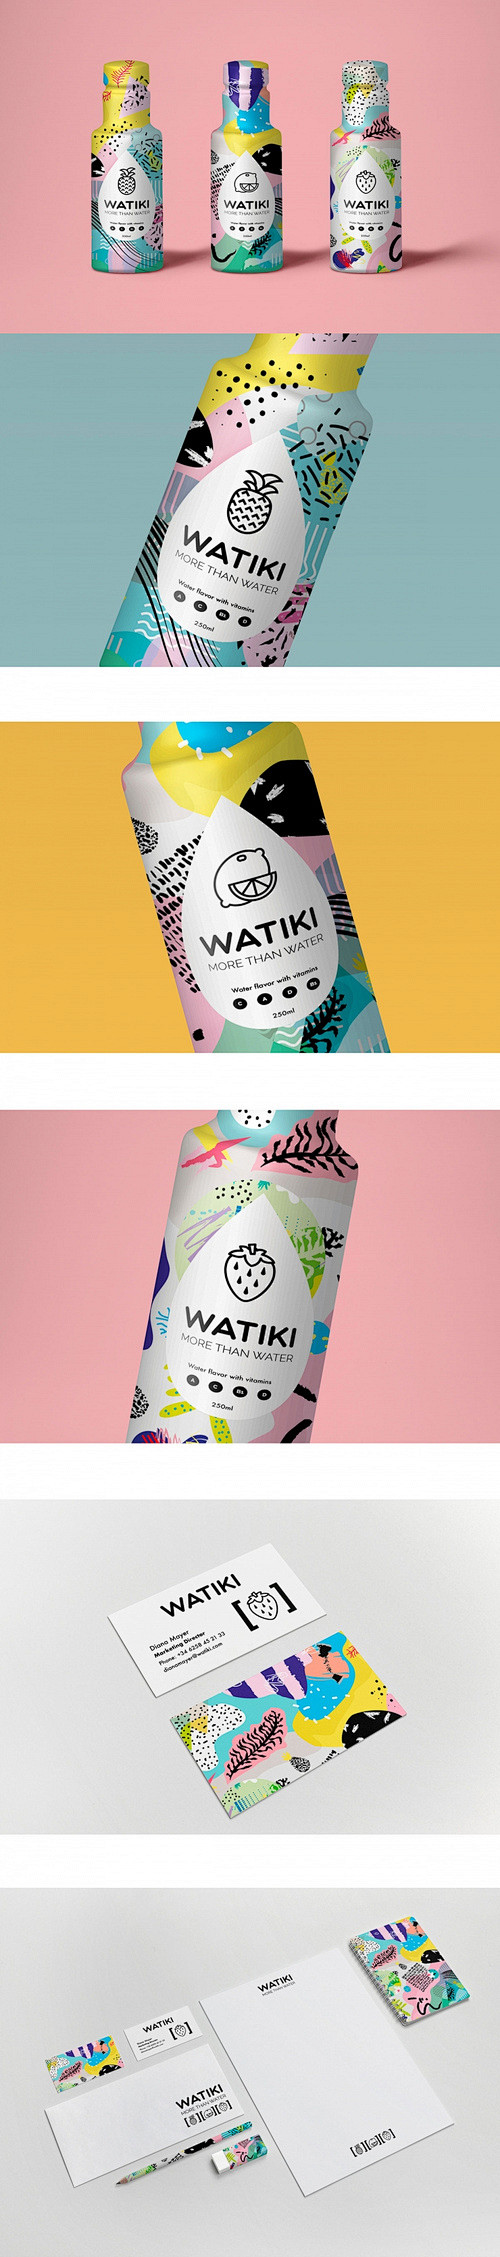 WATIKI品牌包装设计